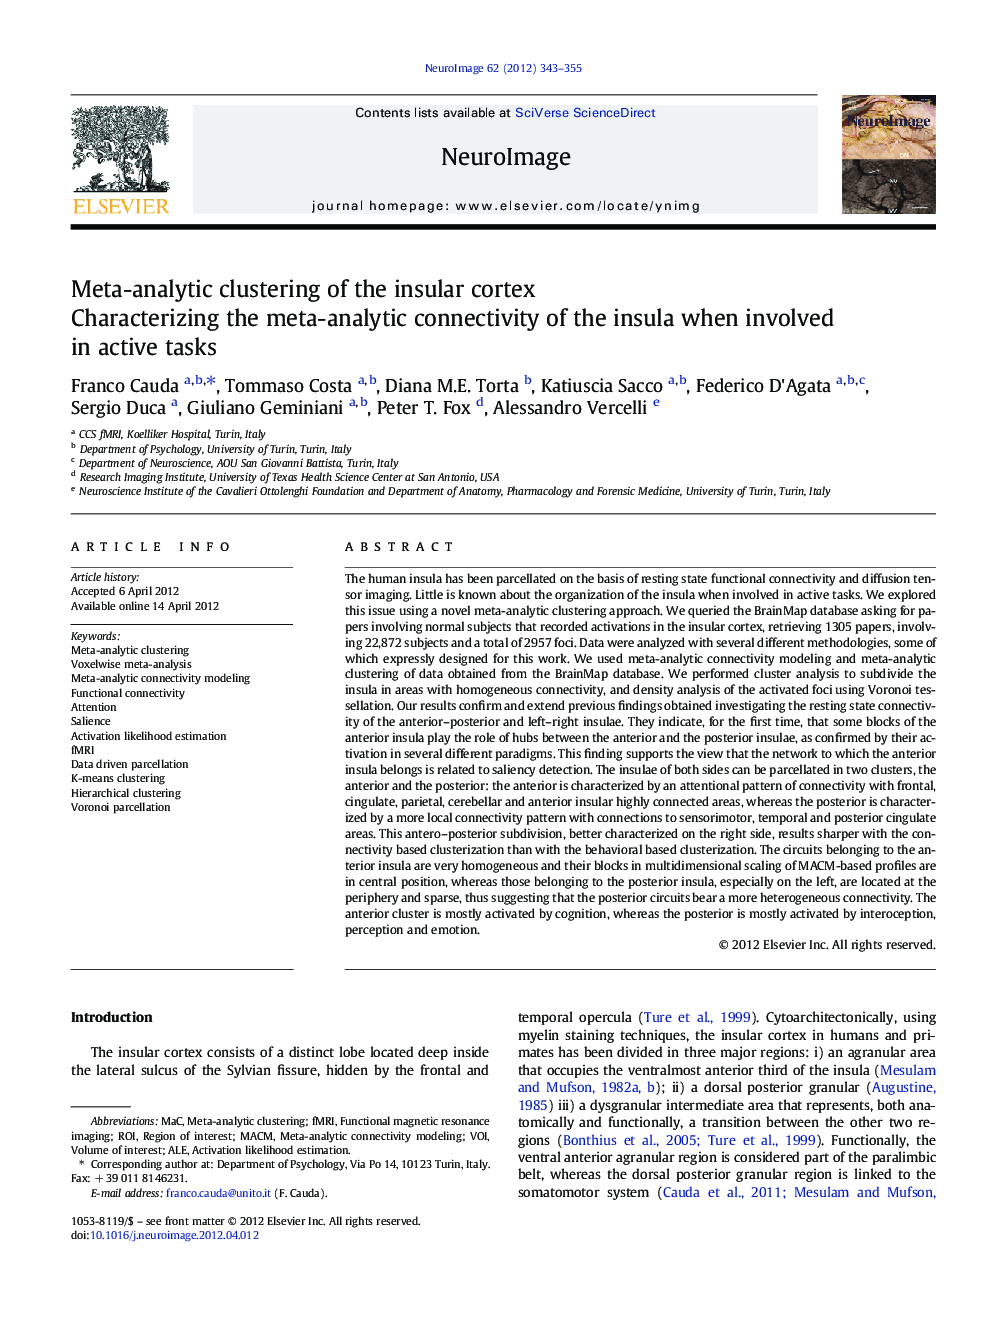 Meta-analytic clustering of the insular cortex